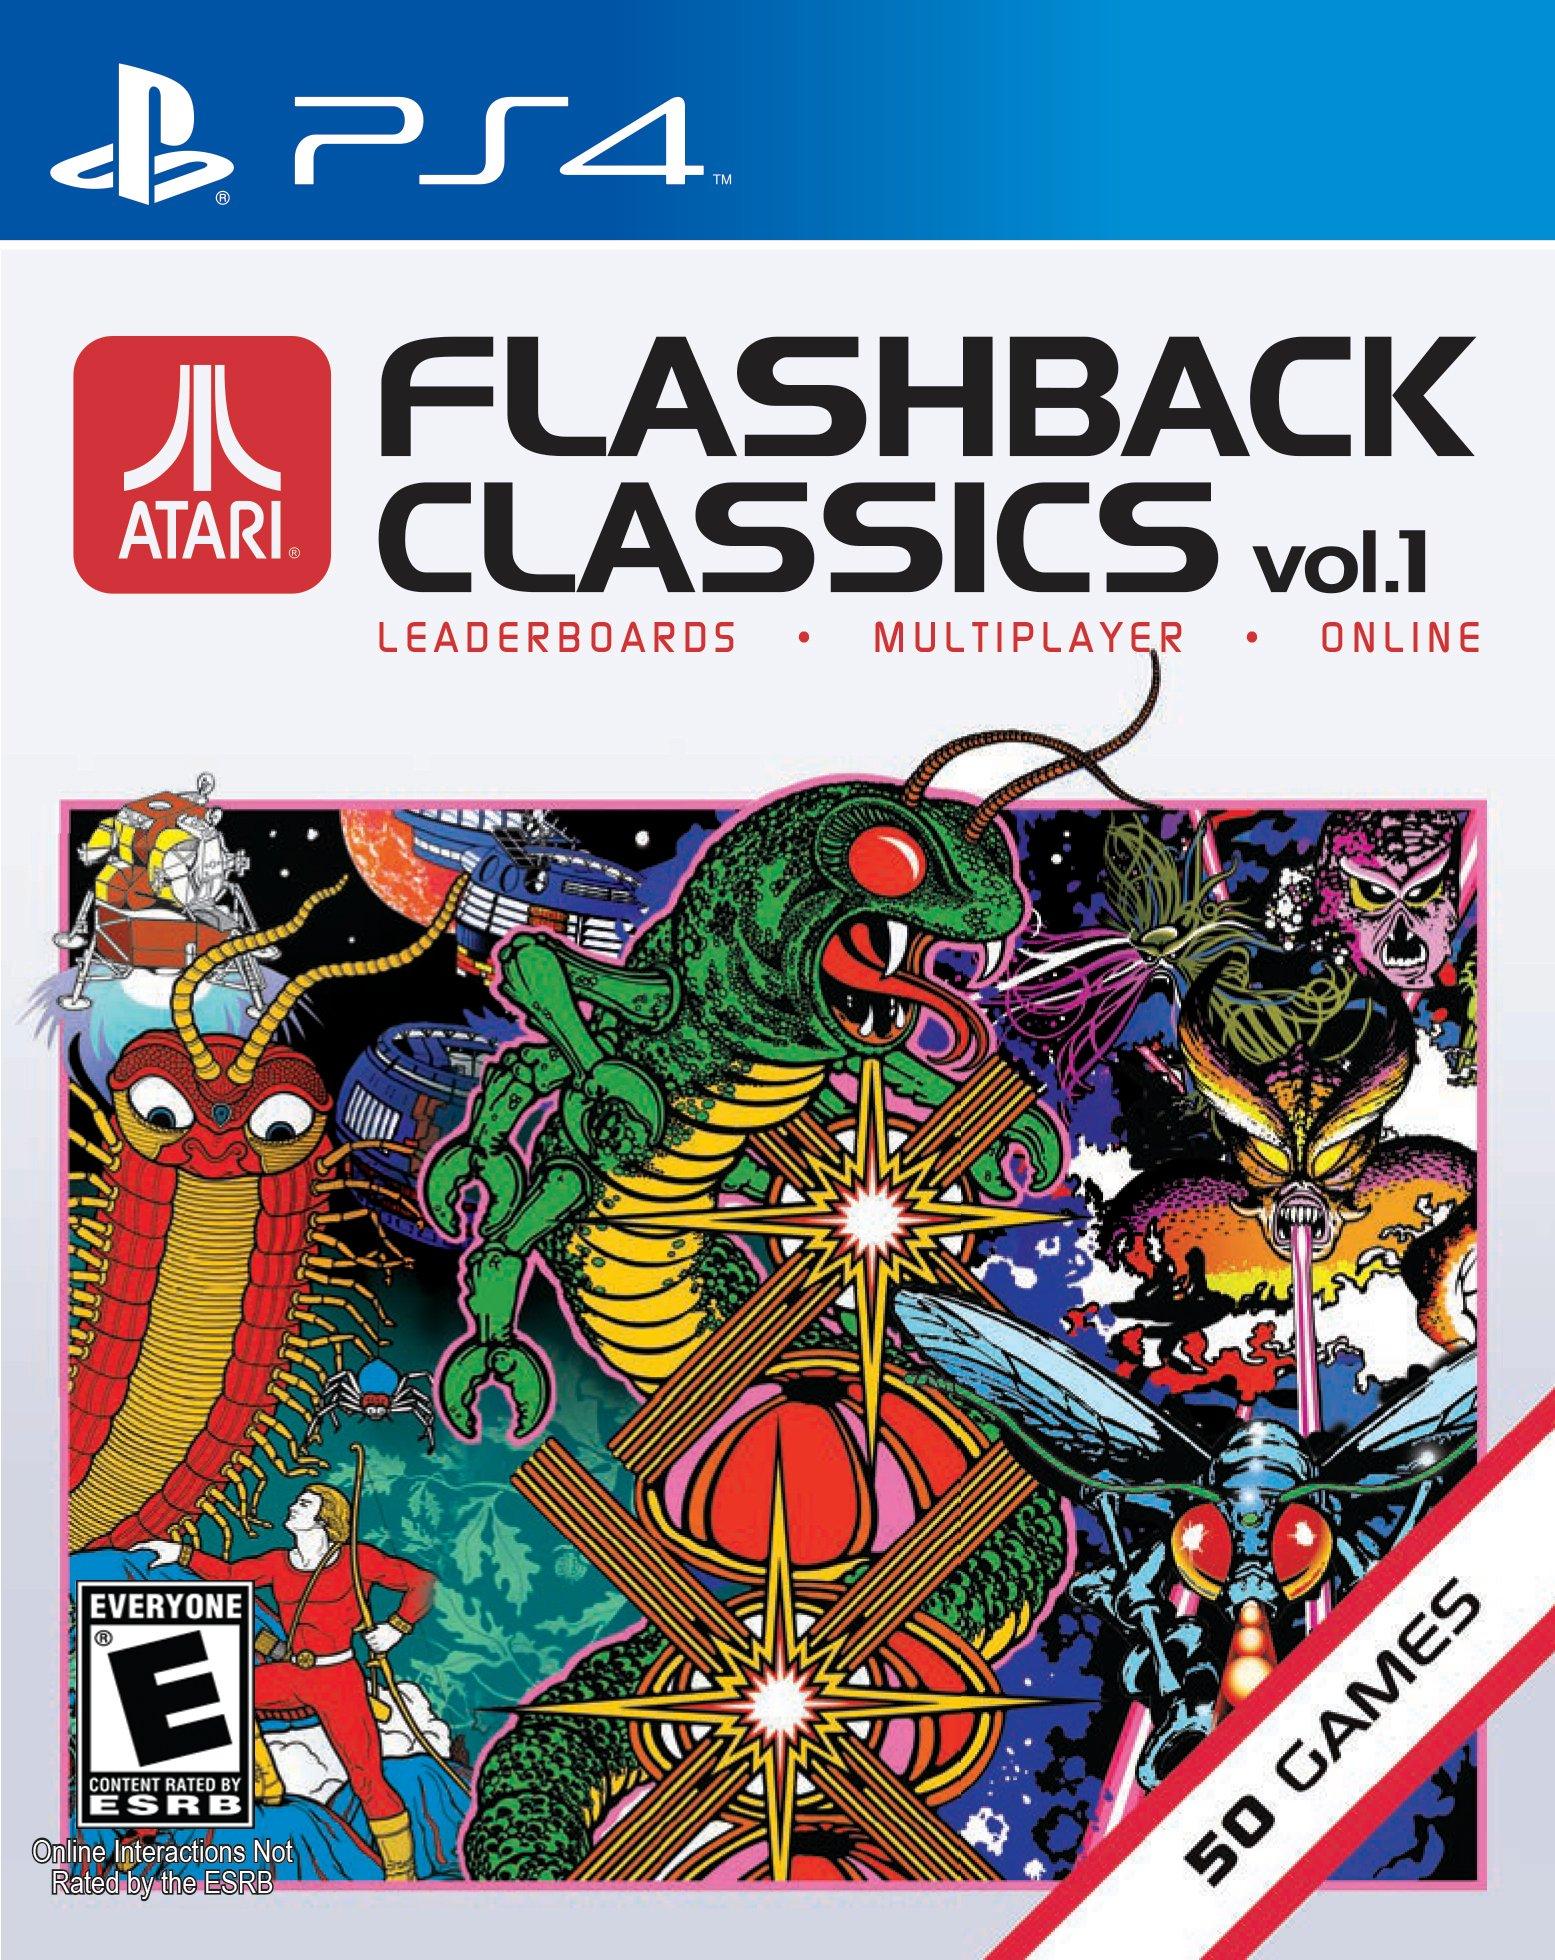 Lad os gøre det Pensioneret pistol Atari Flashback Classics Volume 1 - PlayStation 4 | PlayStation 4 | GameStop